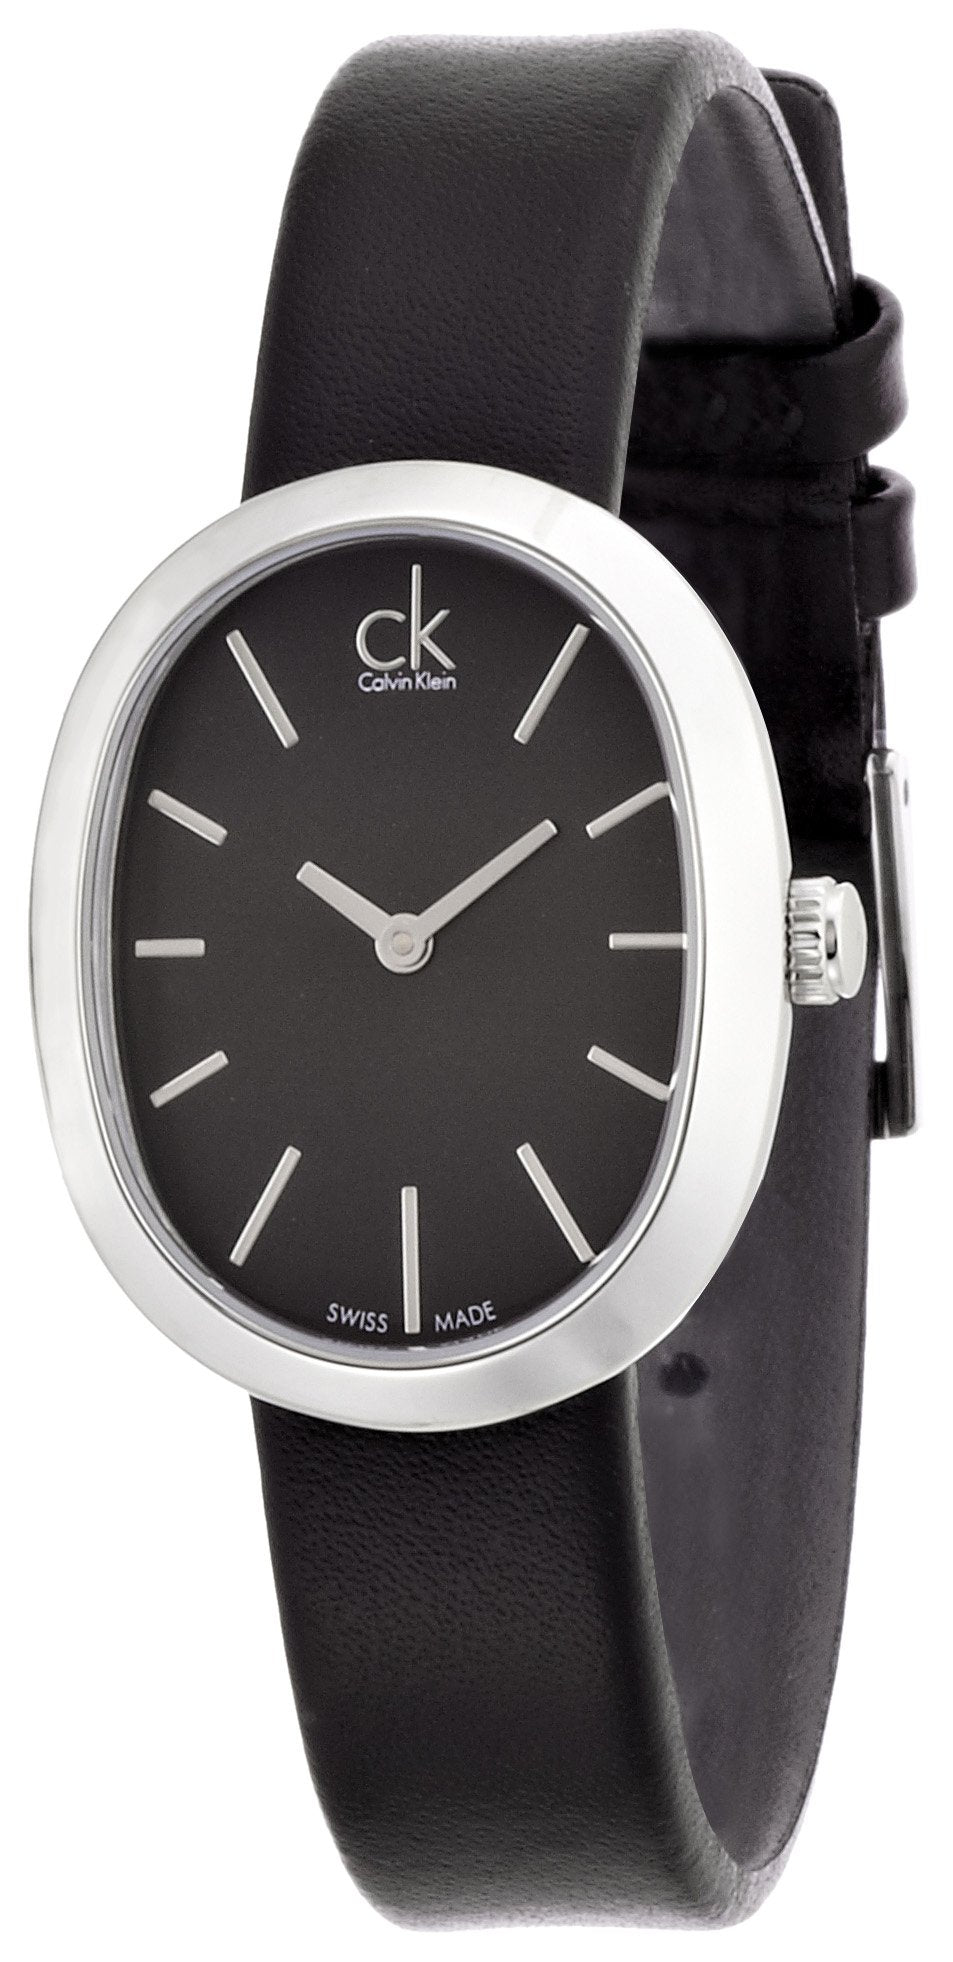 Calvin Klein Incentive Black Dial Black Rubber Strap Watch for Women - K3P231C1